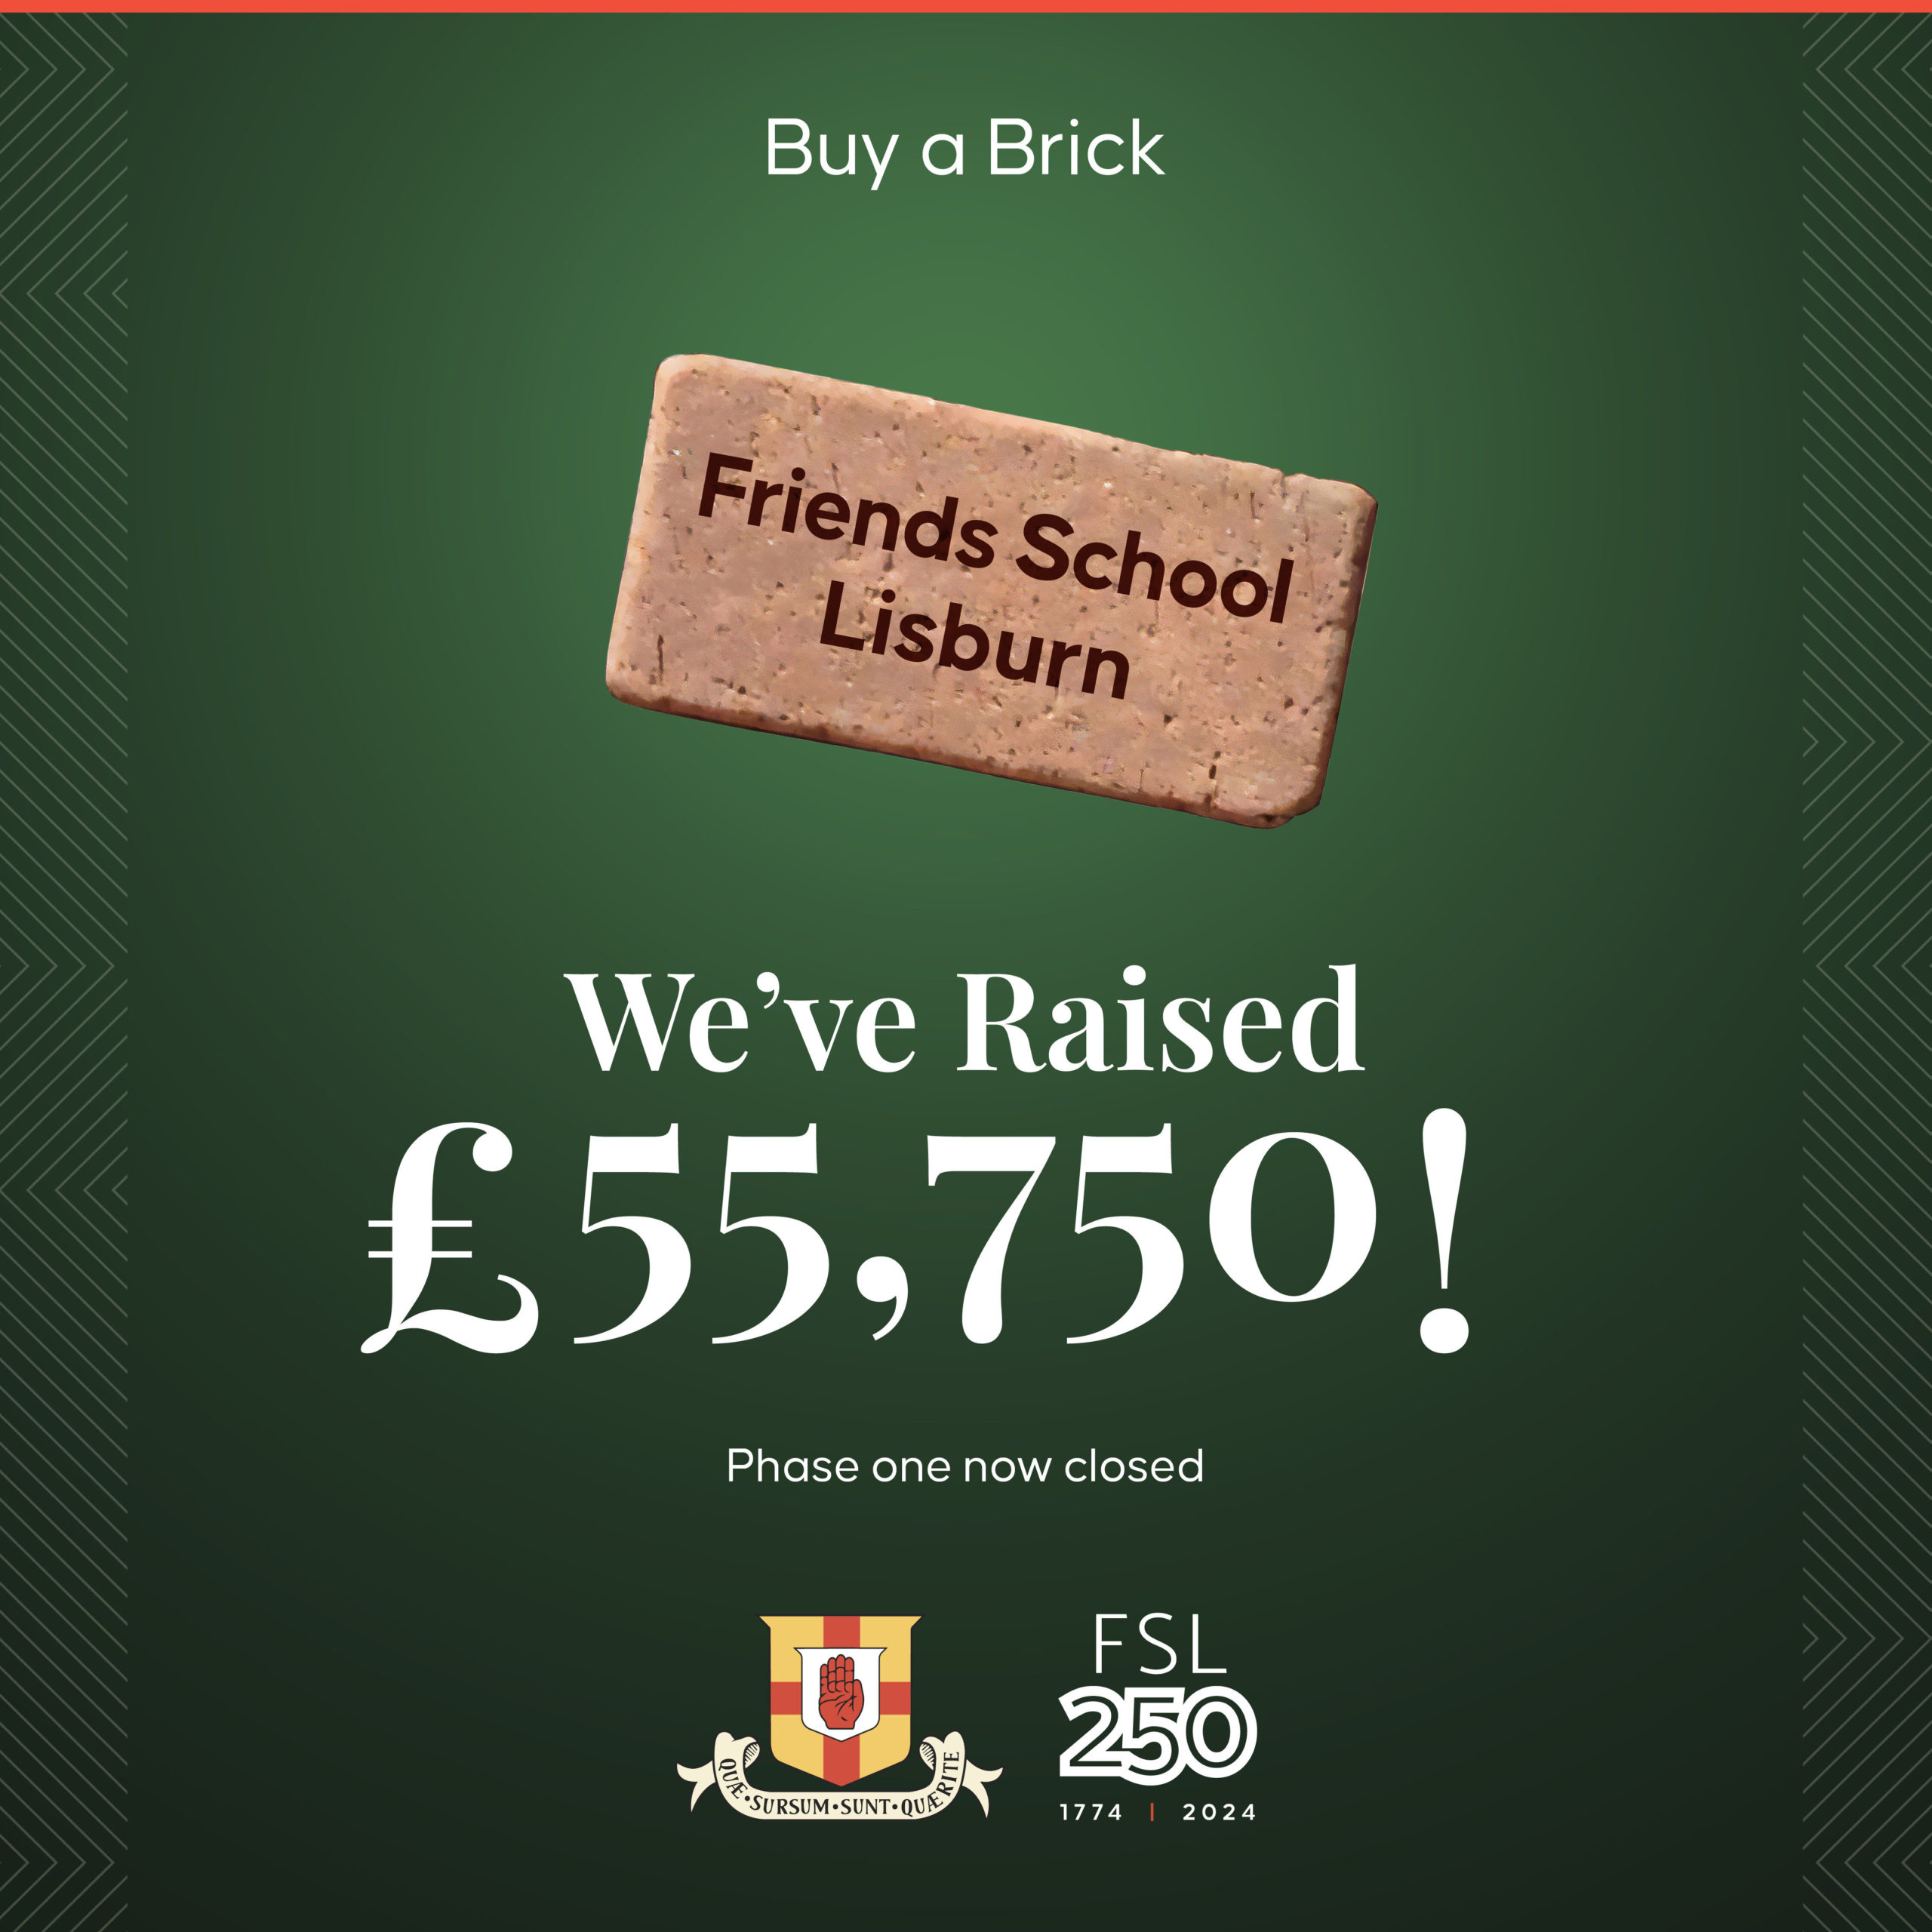 Buy a Brick Campaign Raises £55,750!